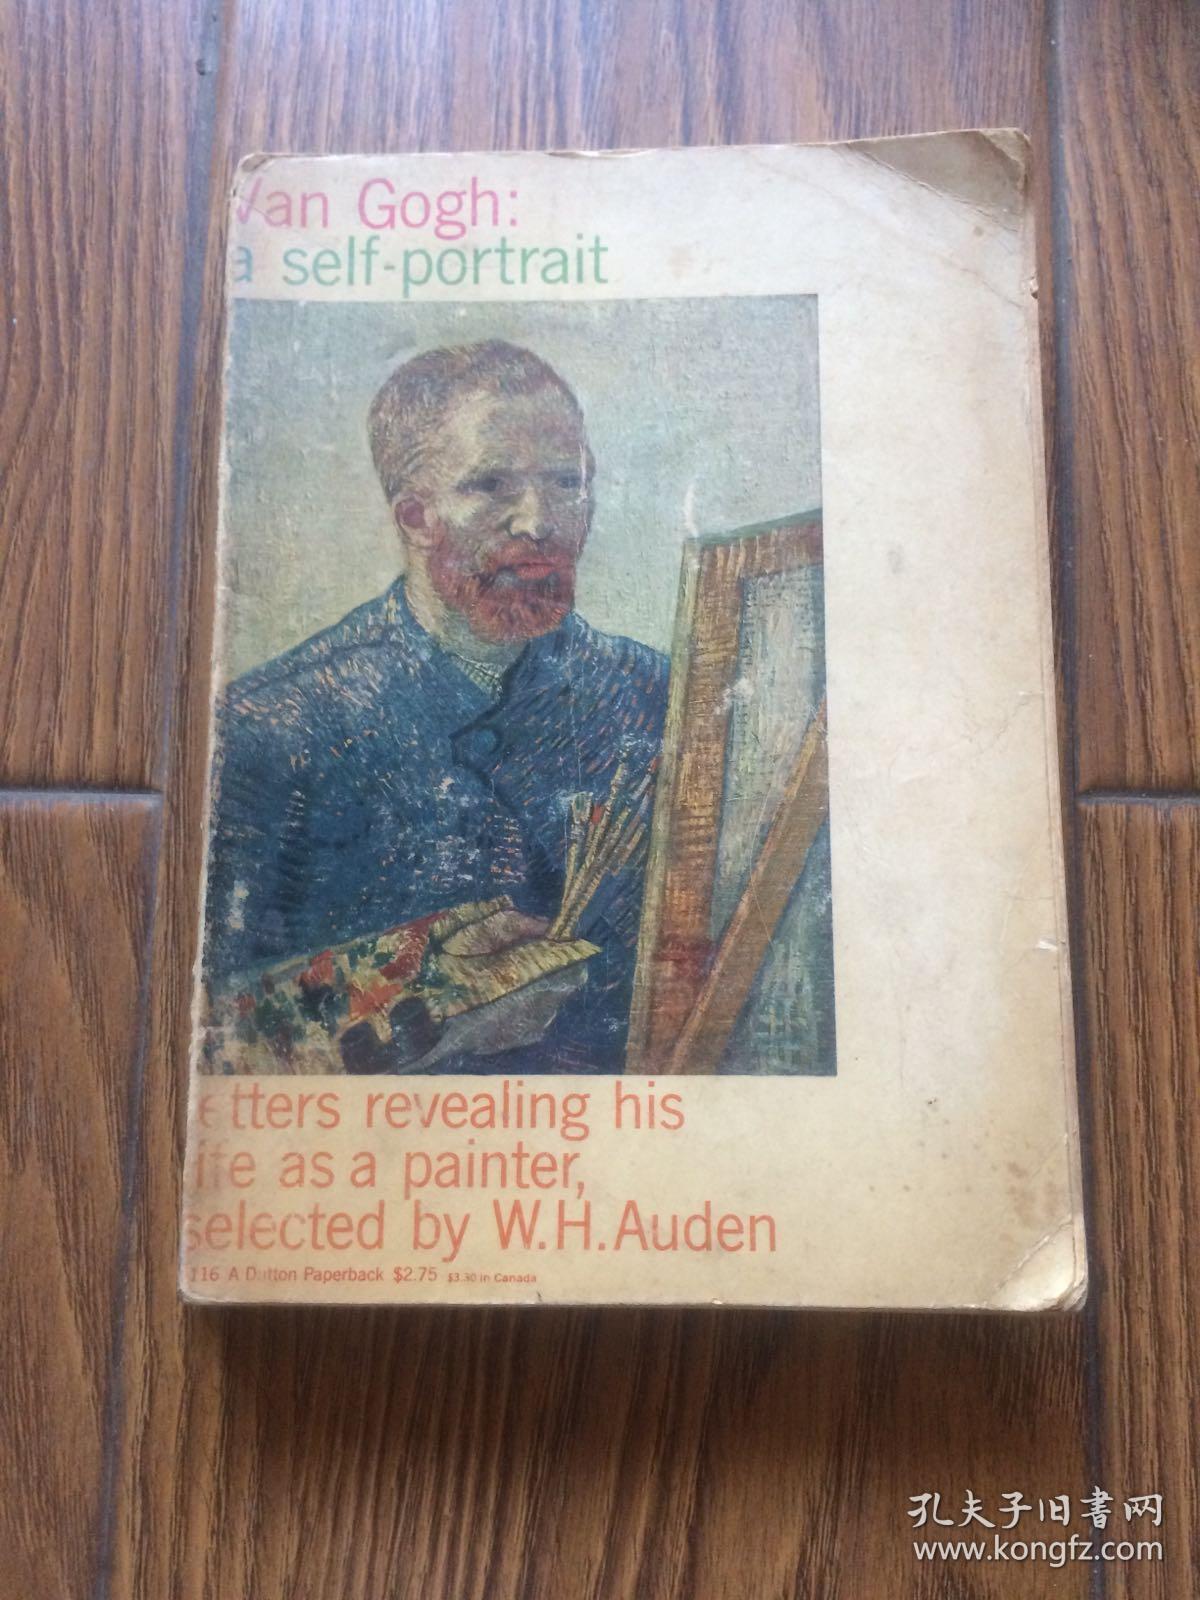 Van Gogh: a self-portrait